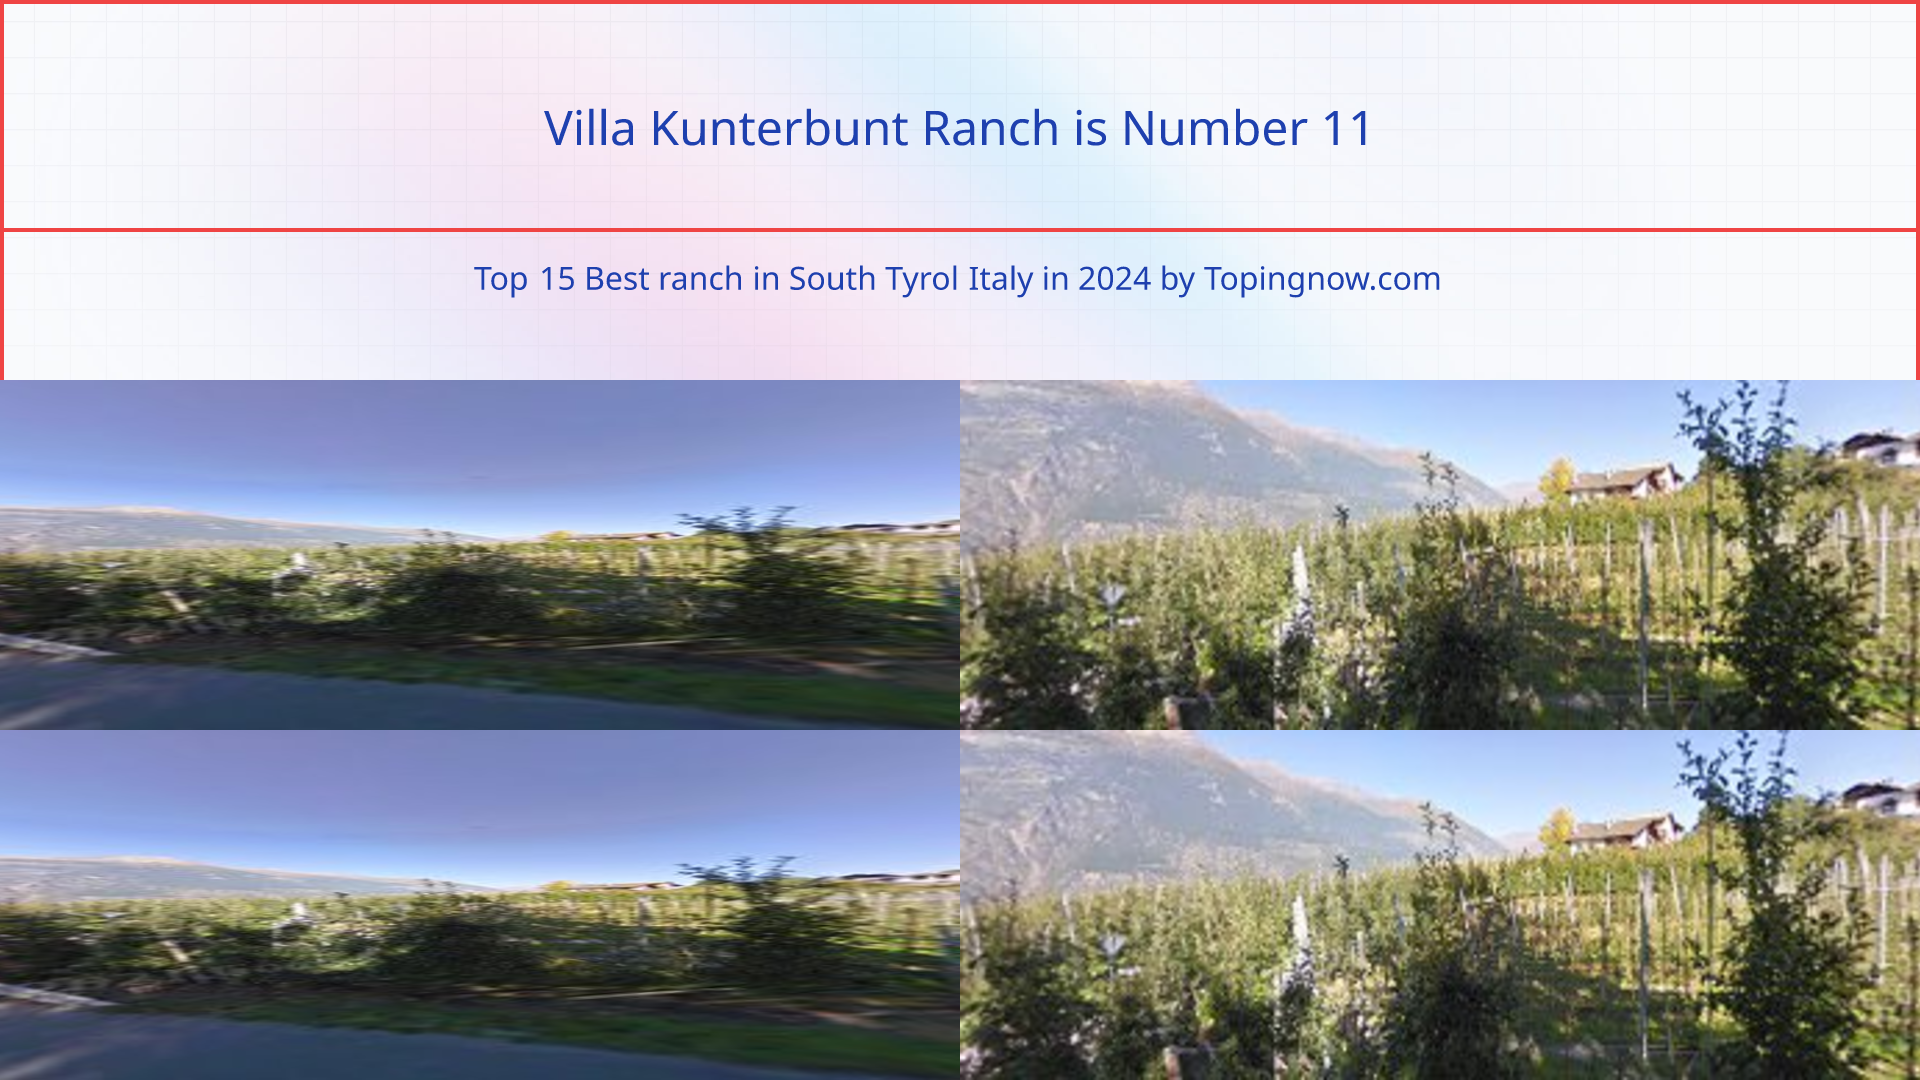 Villa Kunterbunt Ranch: Top 15 Best ranch in South Tyrol Italy in 2024